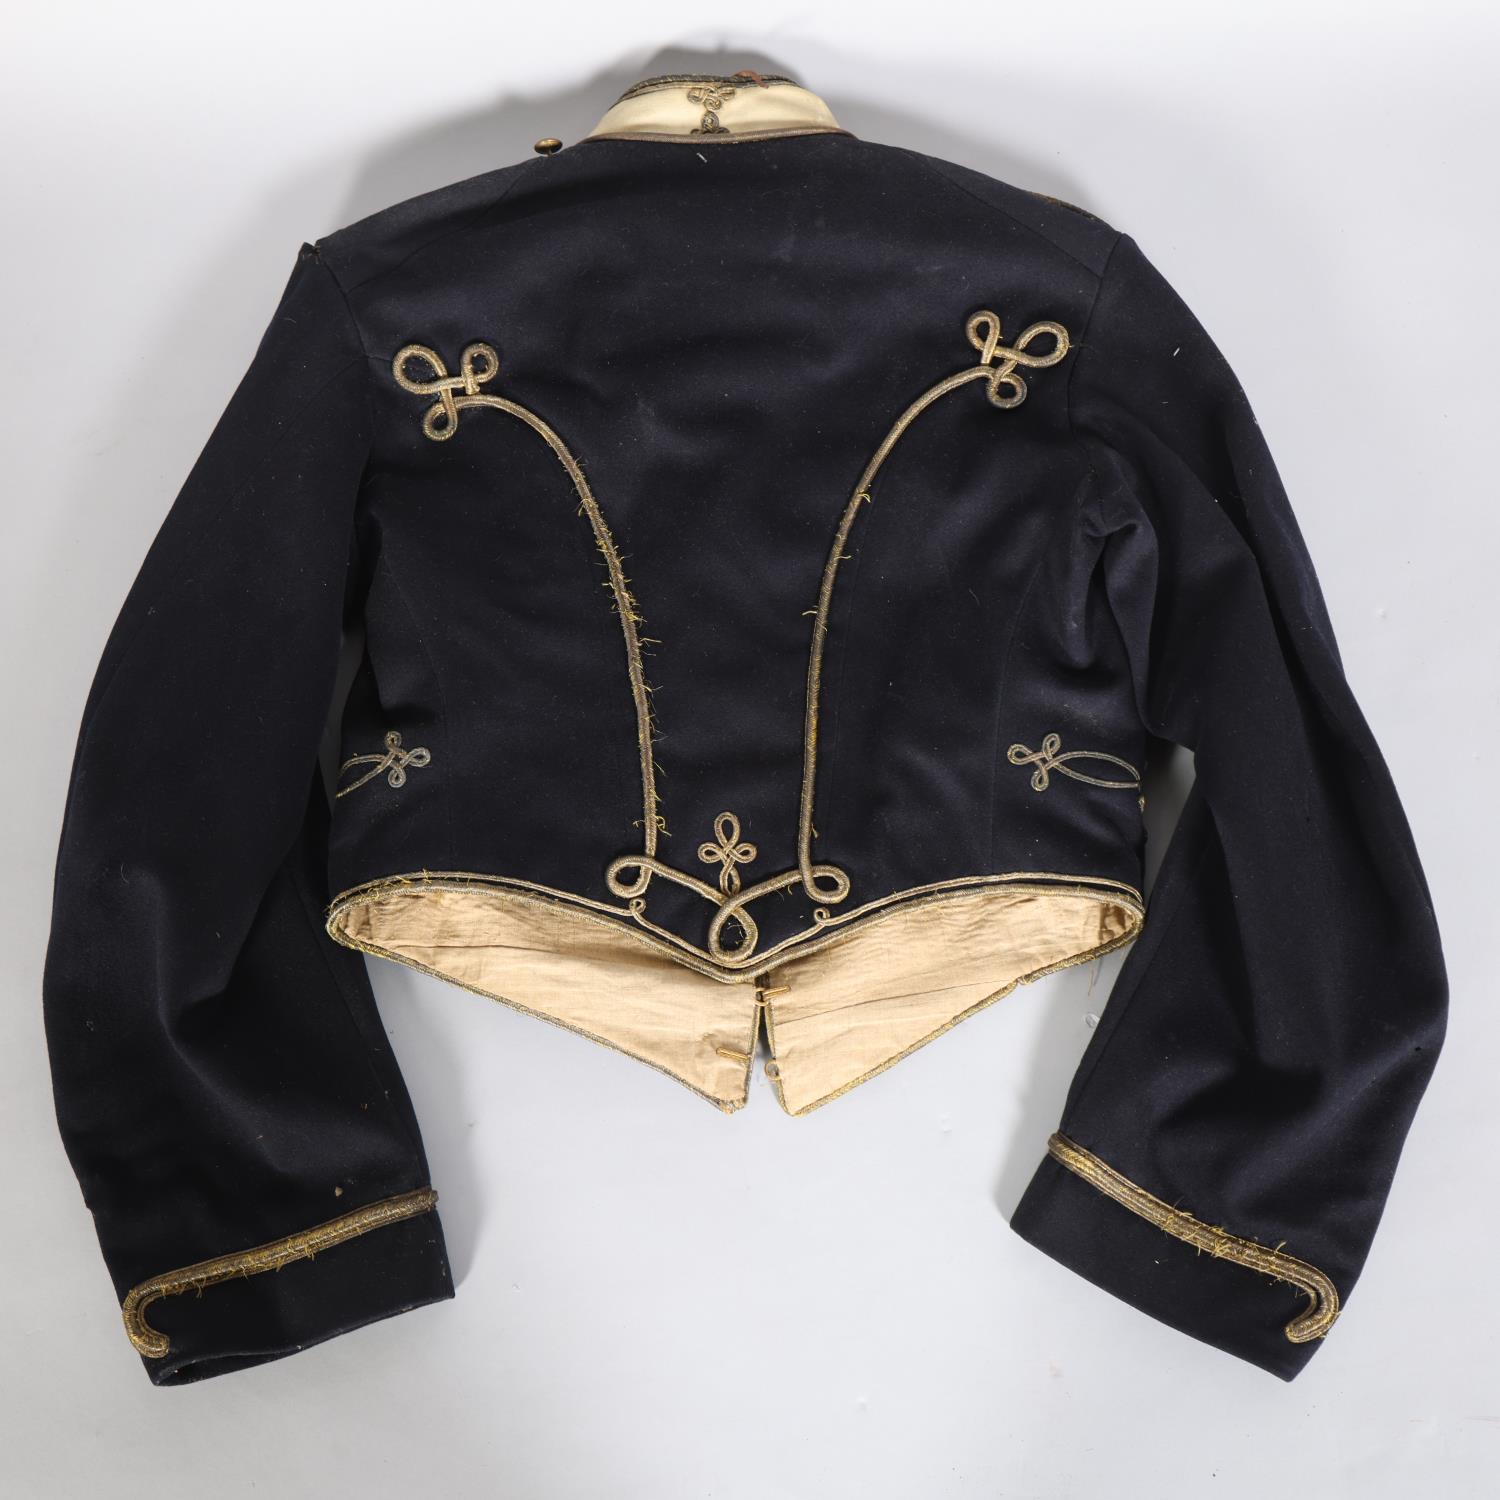 A military Mess jacket, circa 1860s - Image 3 of 3